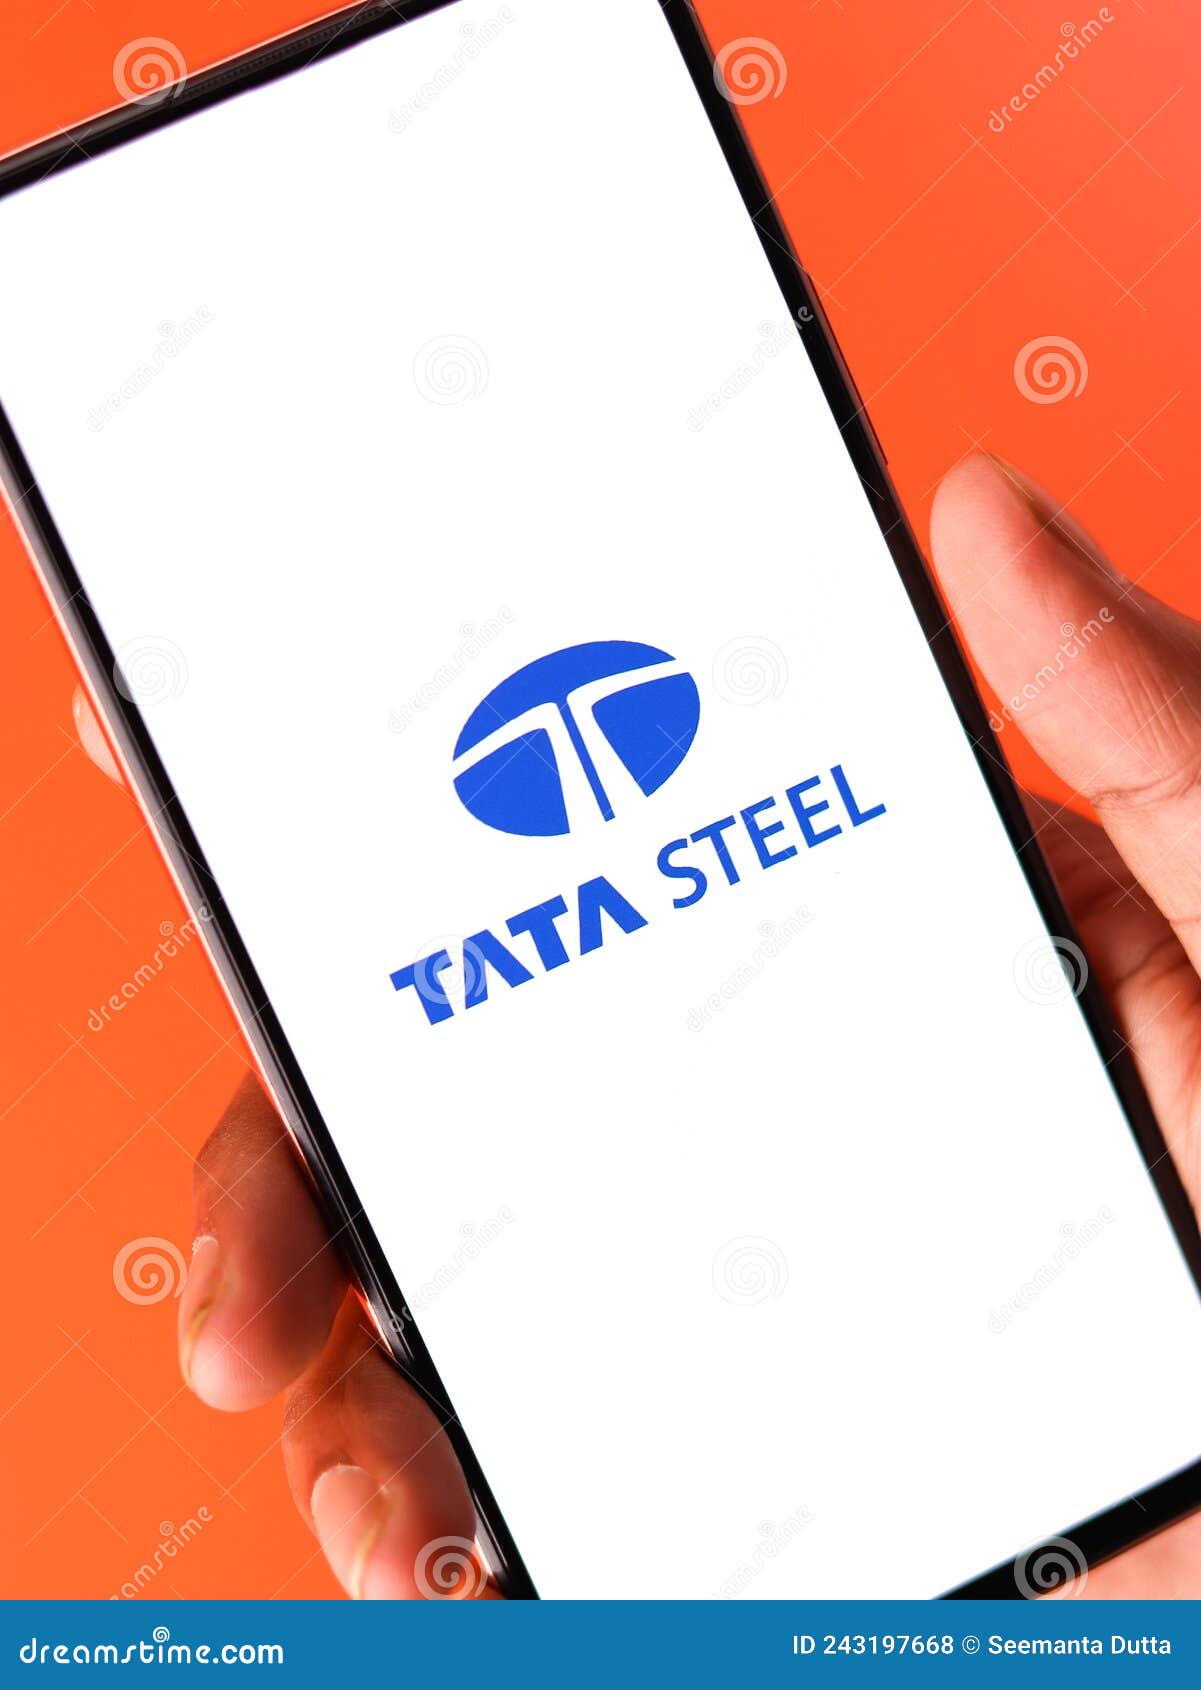 TATA Logo PNG Transparent & SVG Vector - Freebie Supply